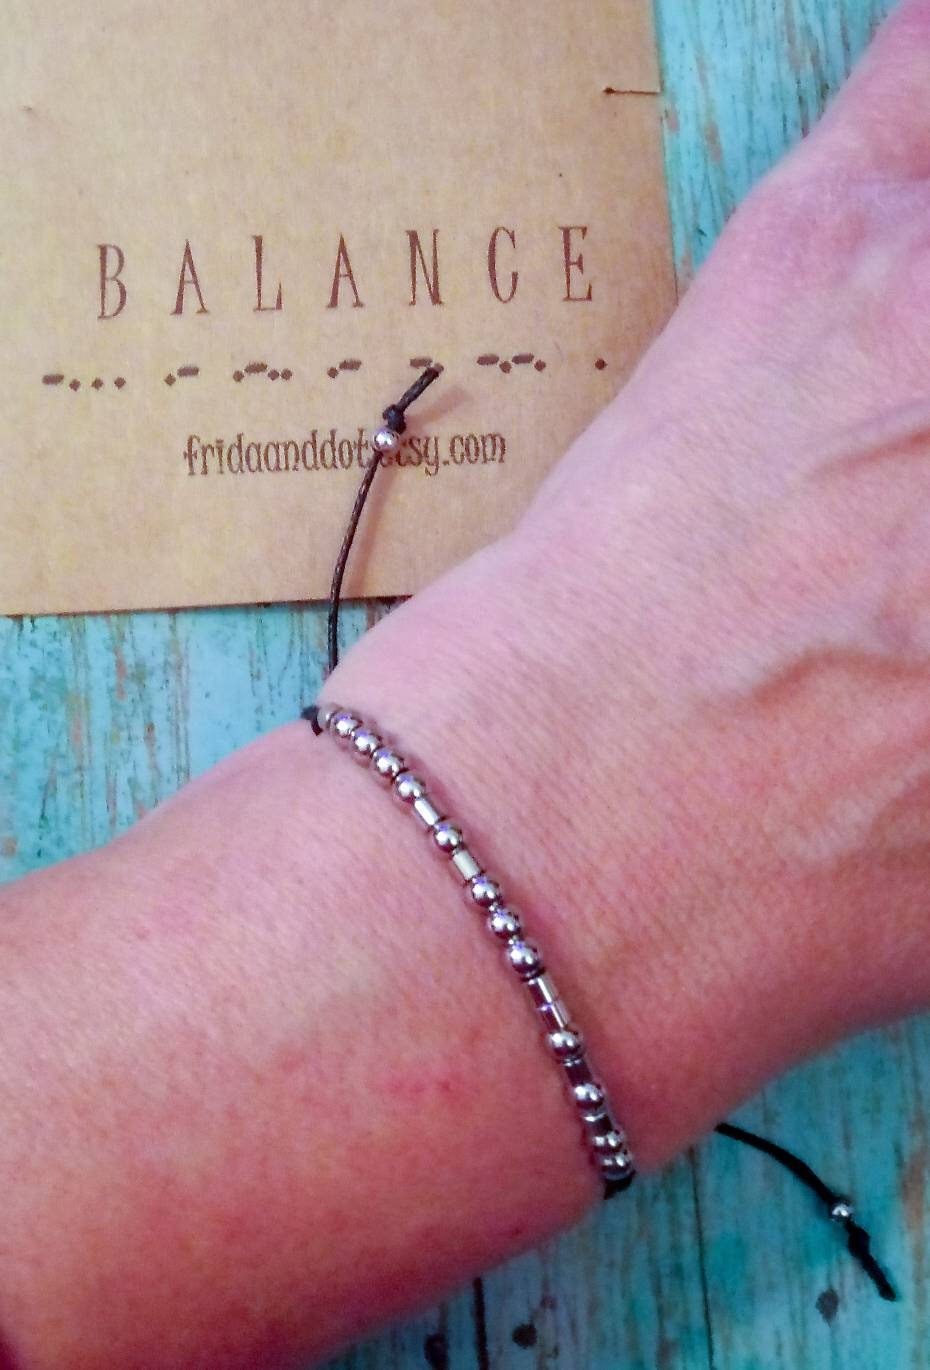 Fish hook bracelet, Couples bracelets, new couple gift, hooked on